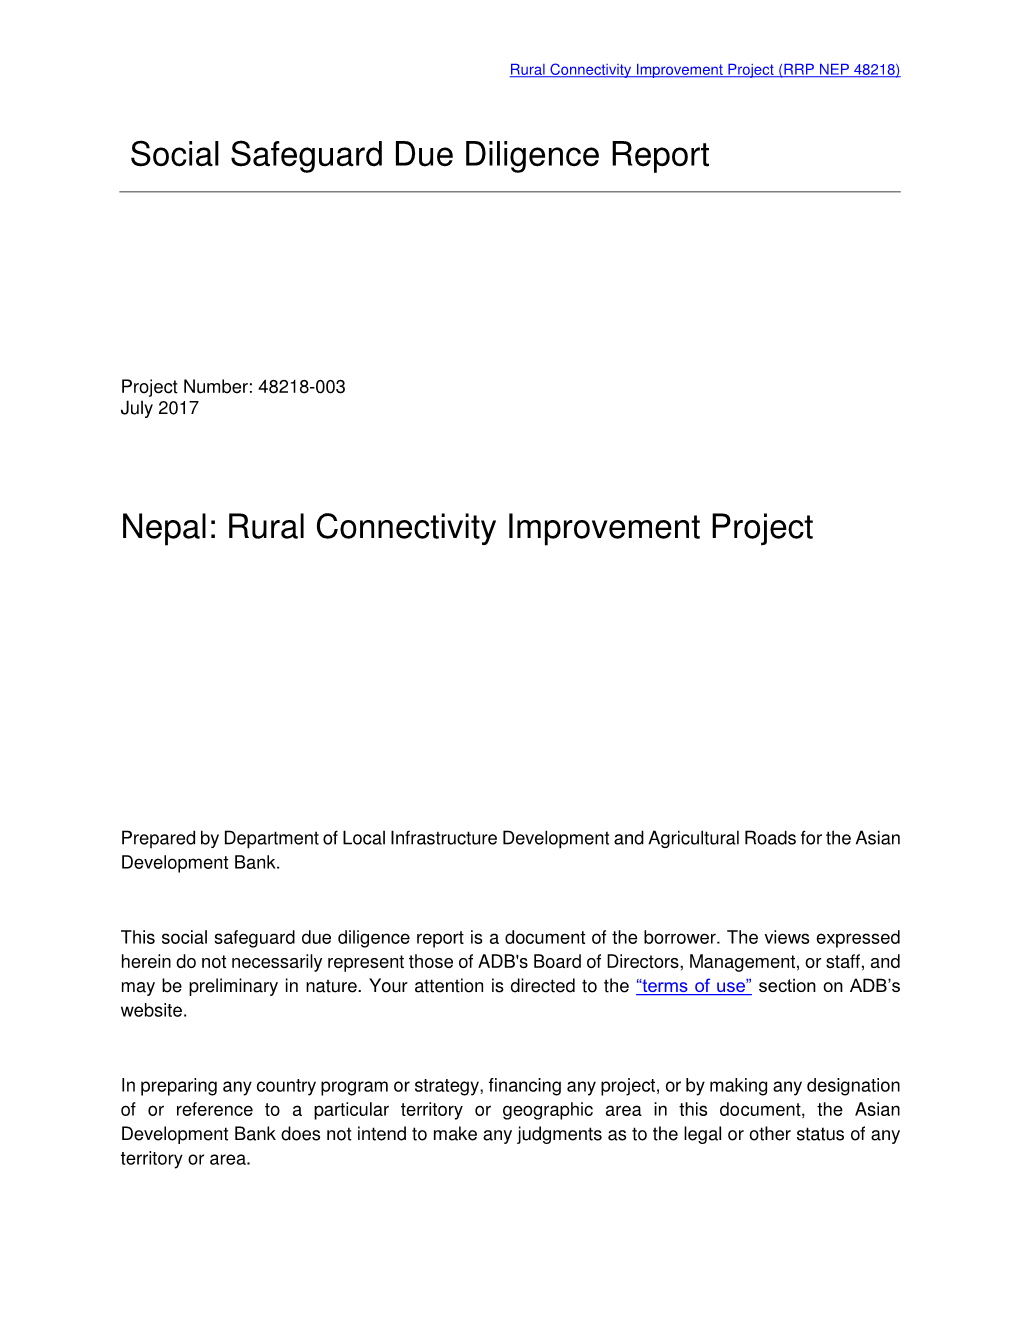 Social Safeguard Due Diligence Report